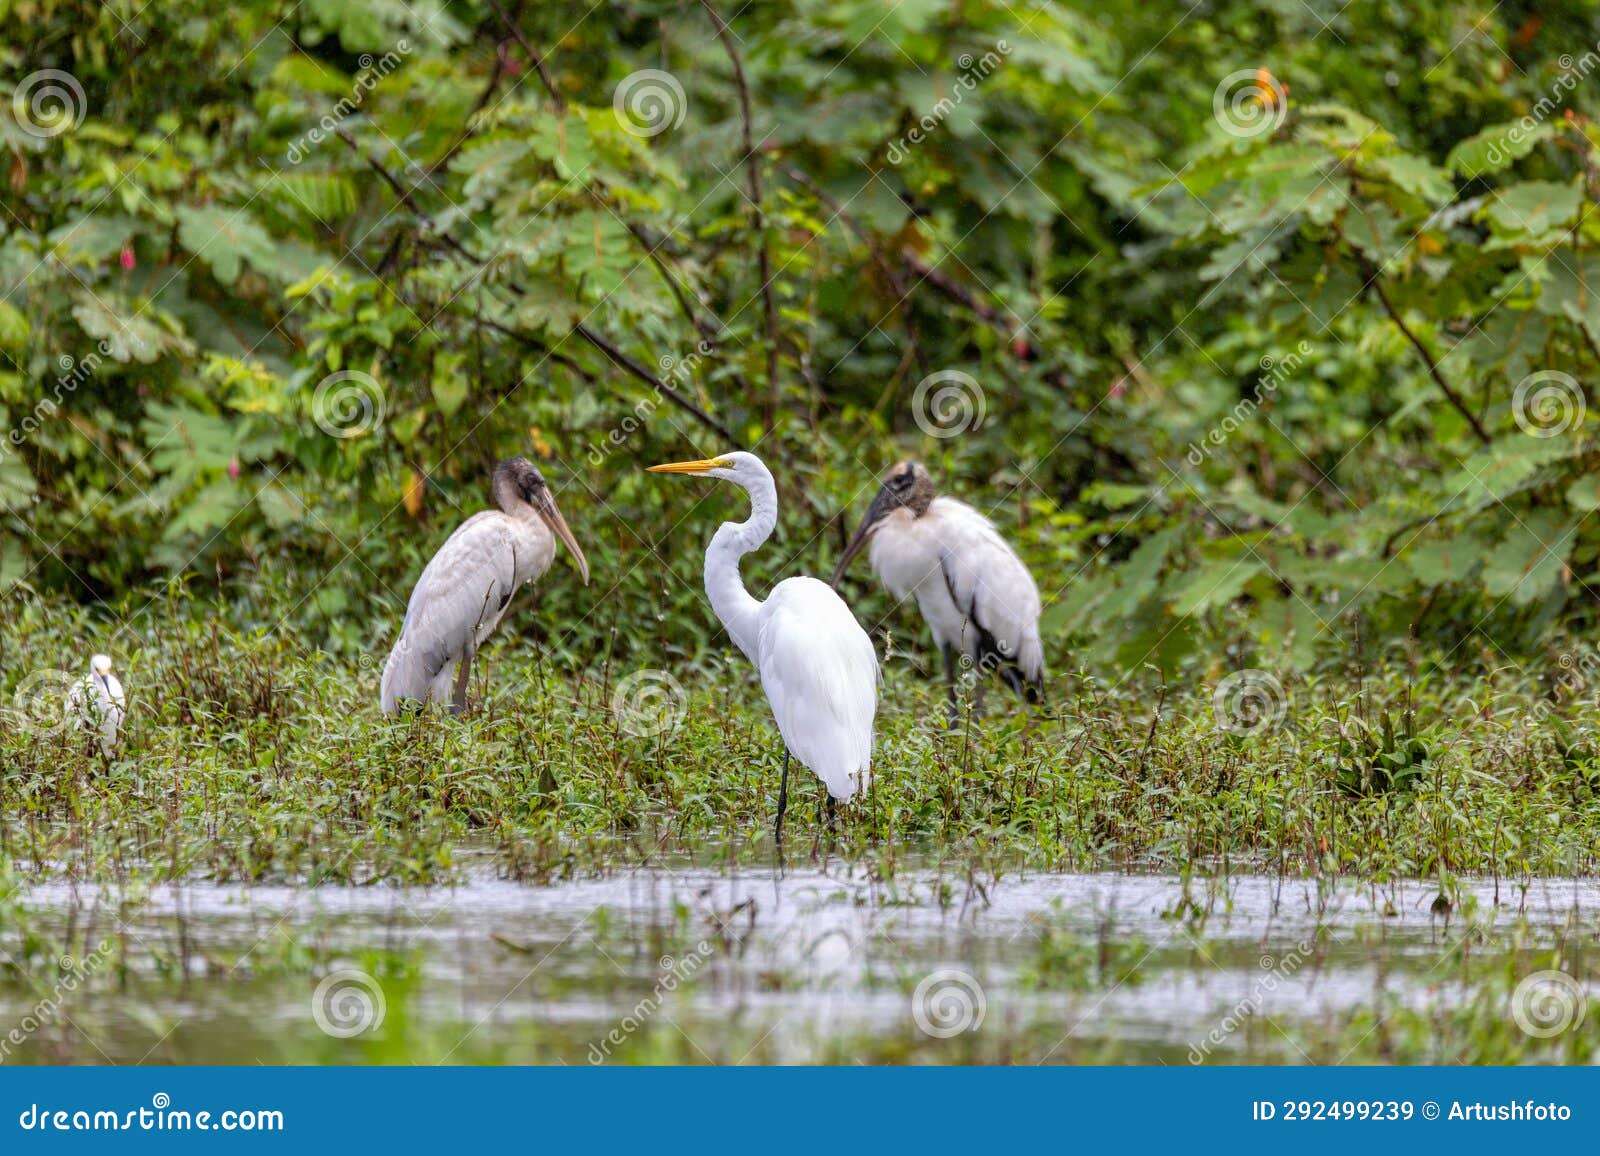 great egret - ardea alba, refugio de vida silvestre cano negro, wildlife and birdwatching in costa rica